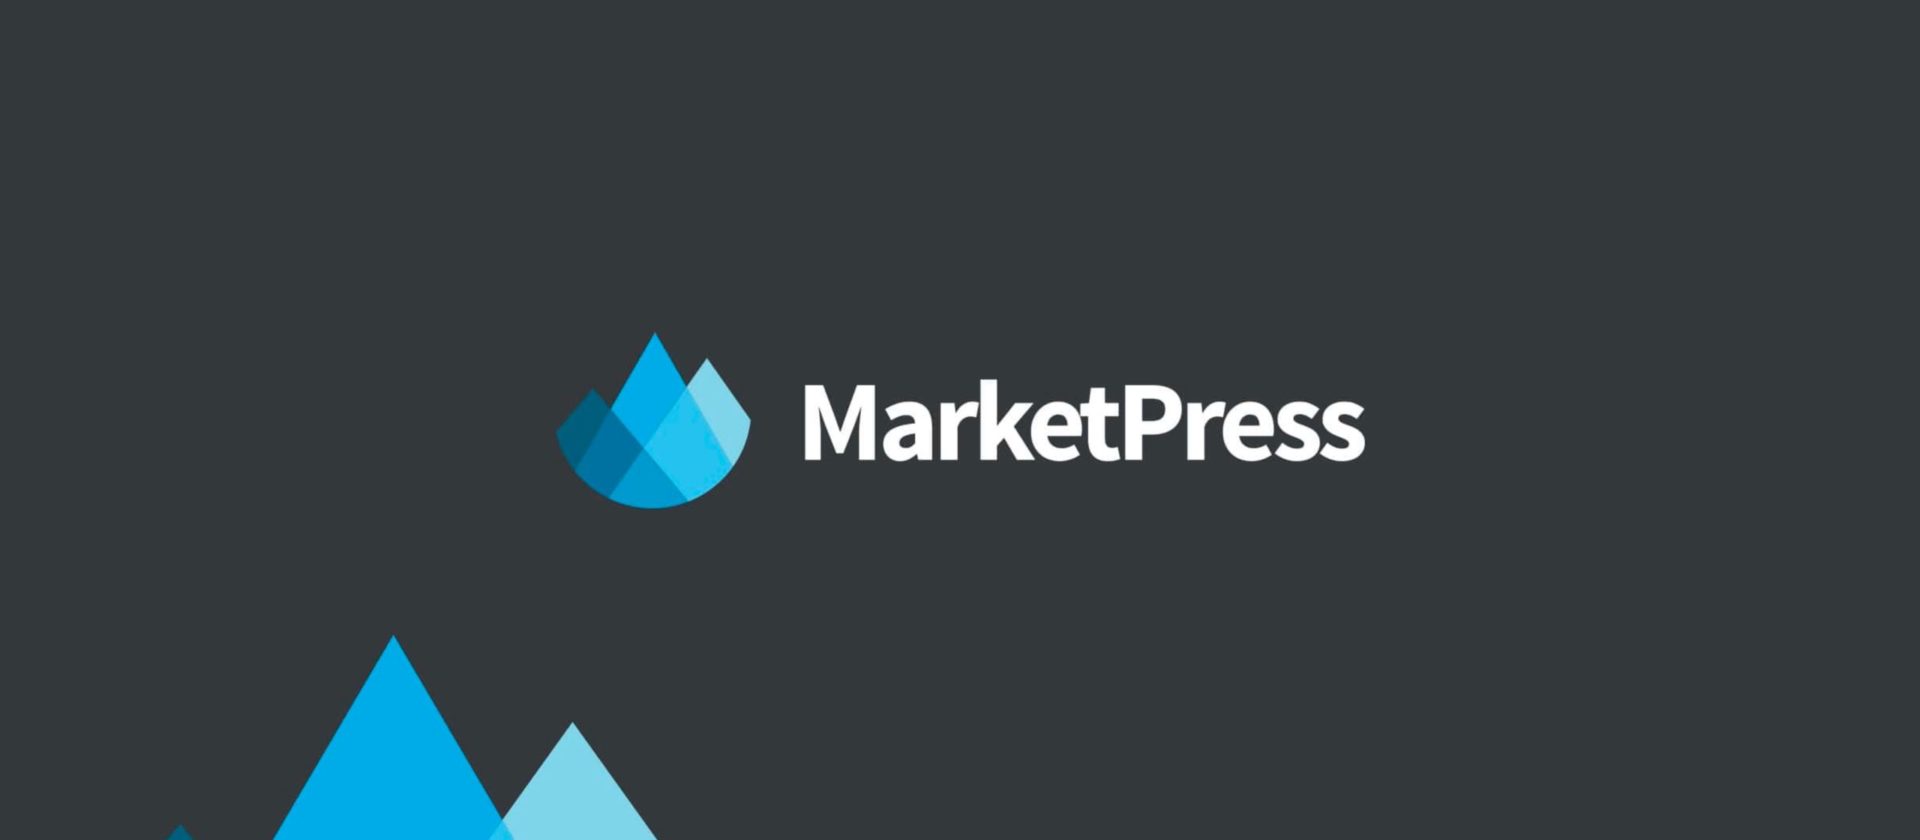 MarketPress Logo